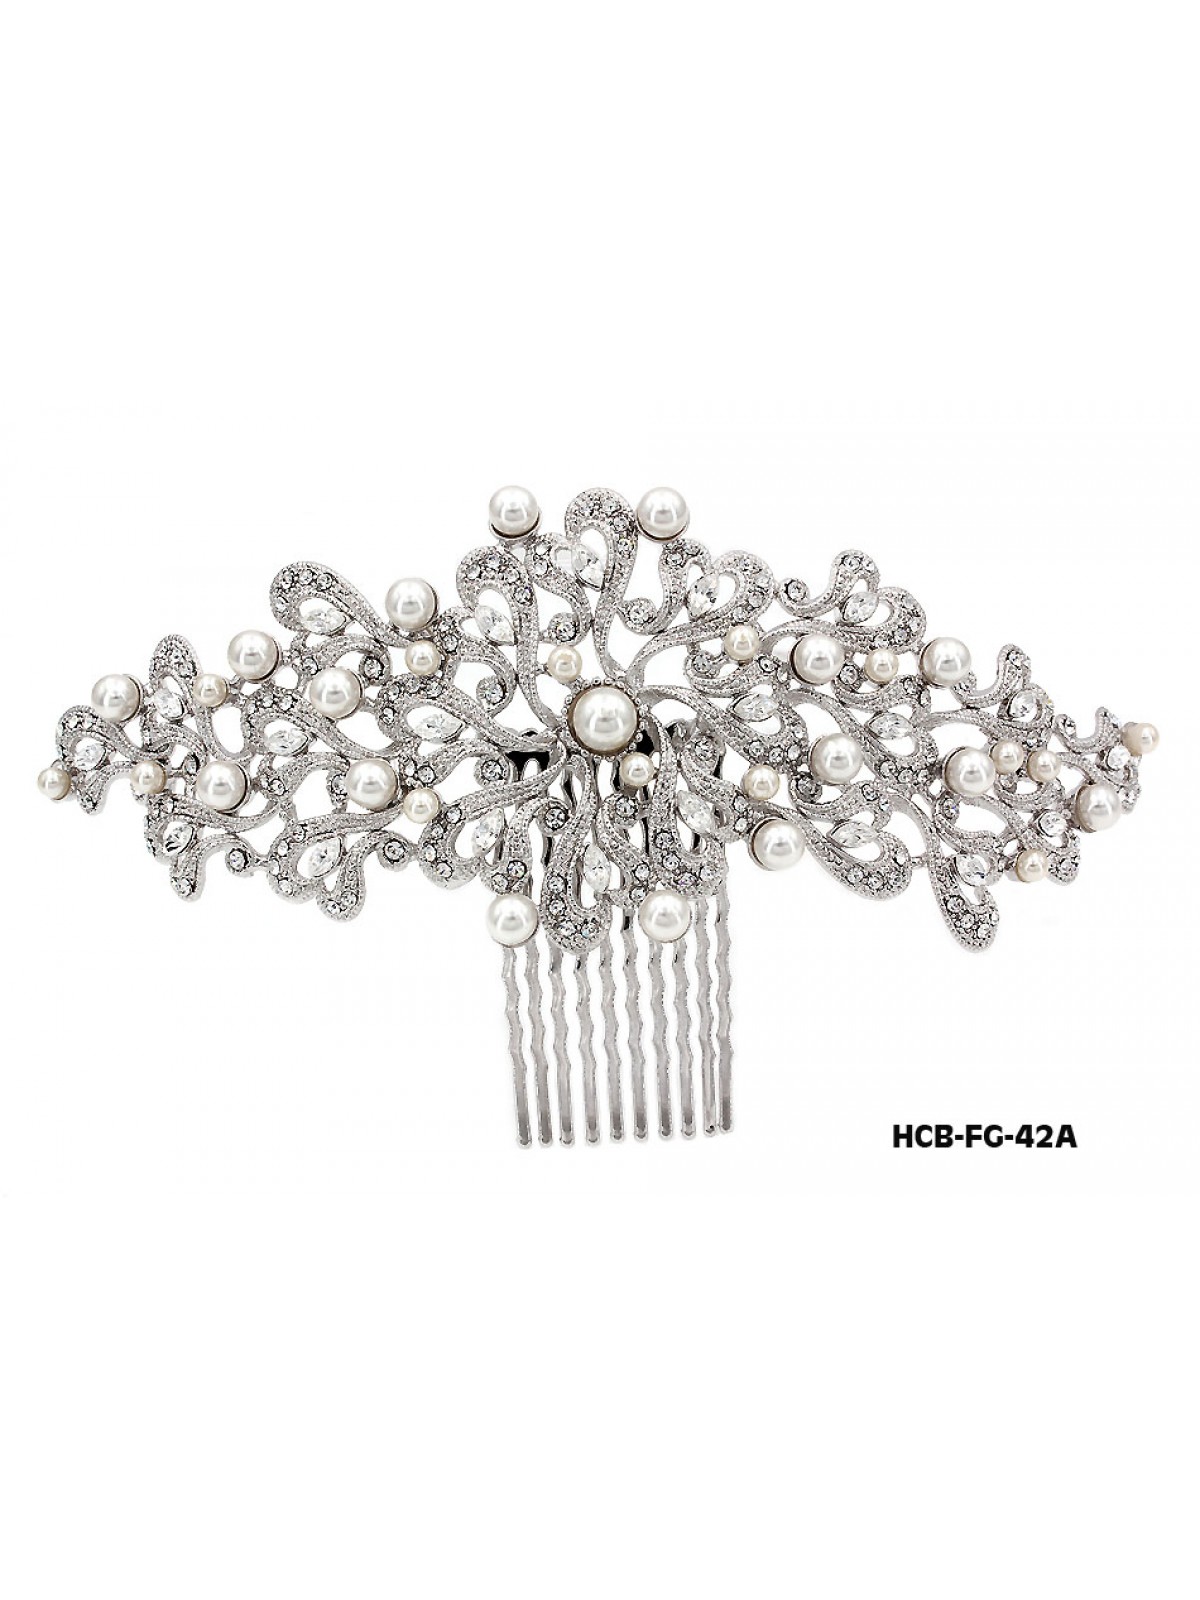 Hair Comb – Bridal Hair Combs & Clips w/ Austrian Crystal Stones Filigree - HCB-FG-42A